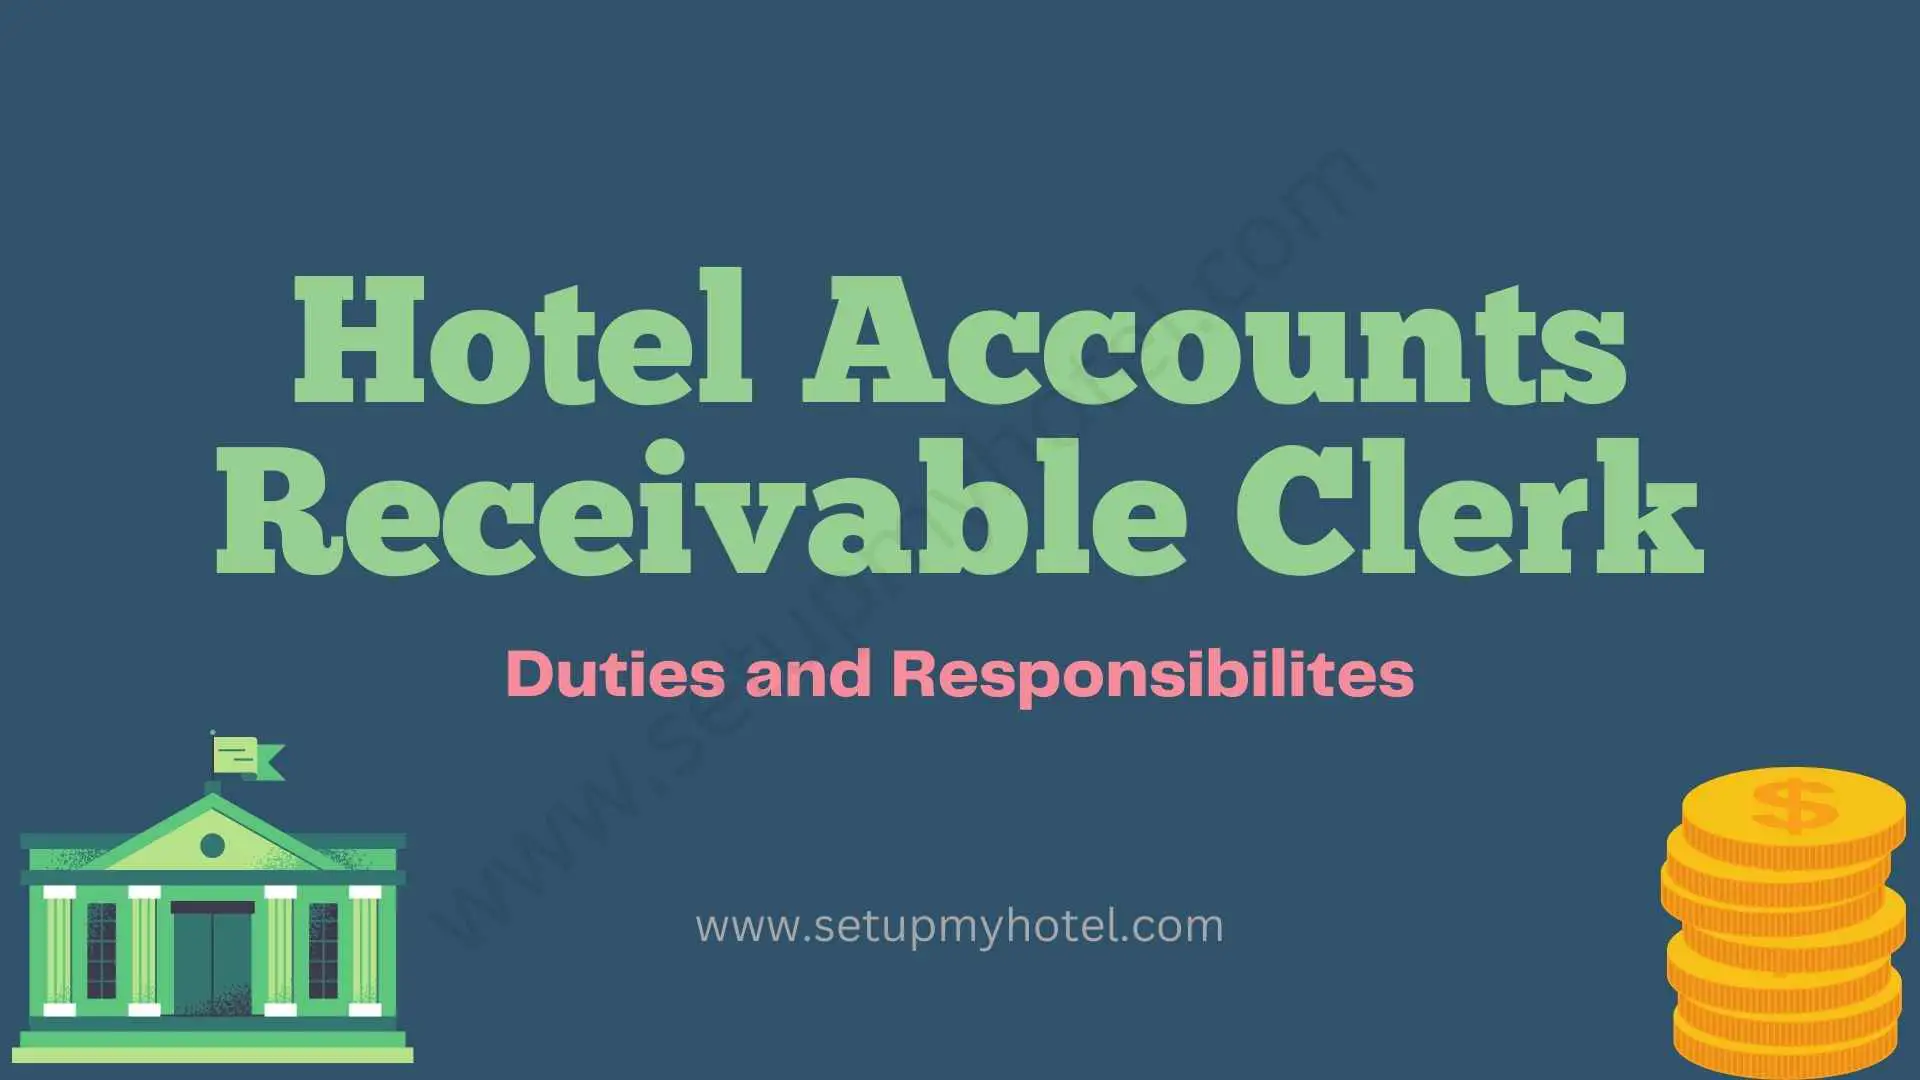 Hotel Accounts Receivable Clerk Duties and Responsibilities